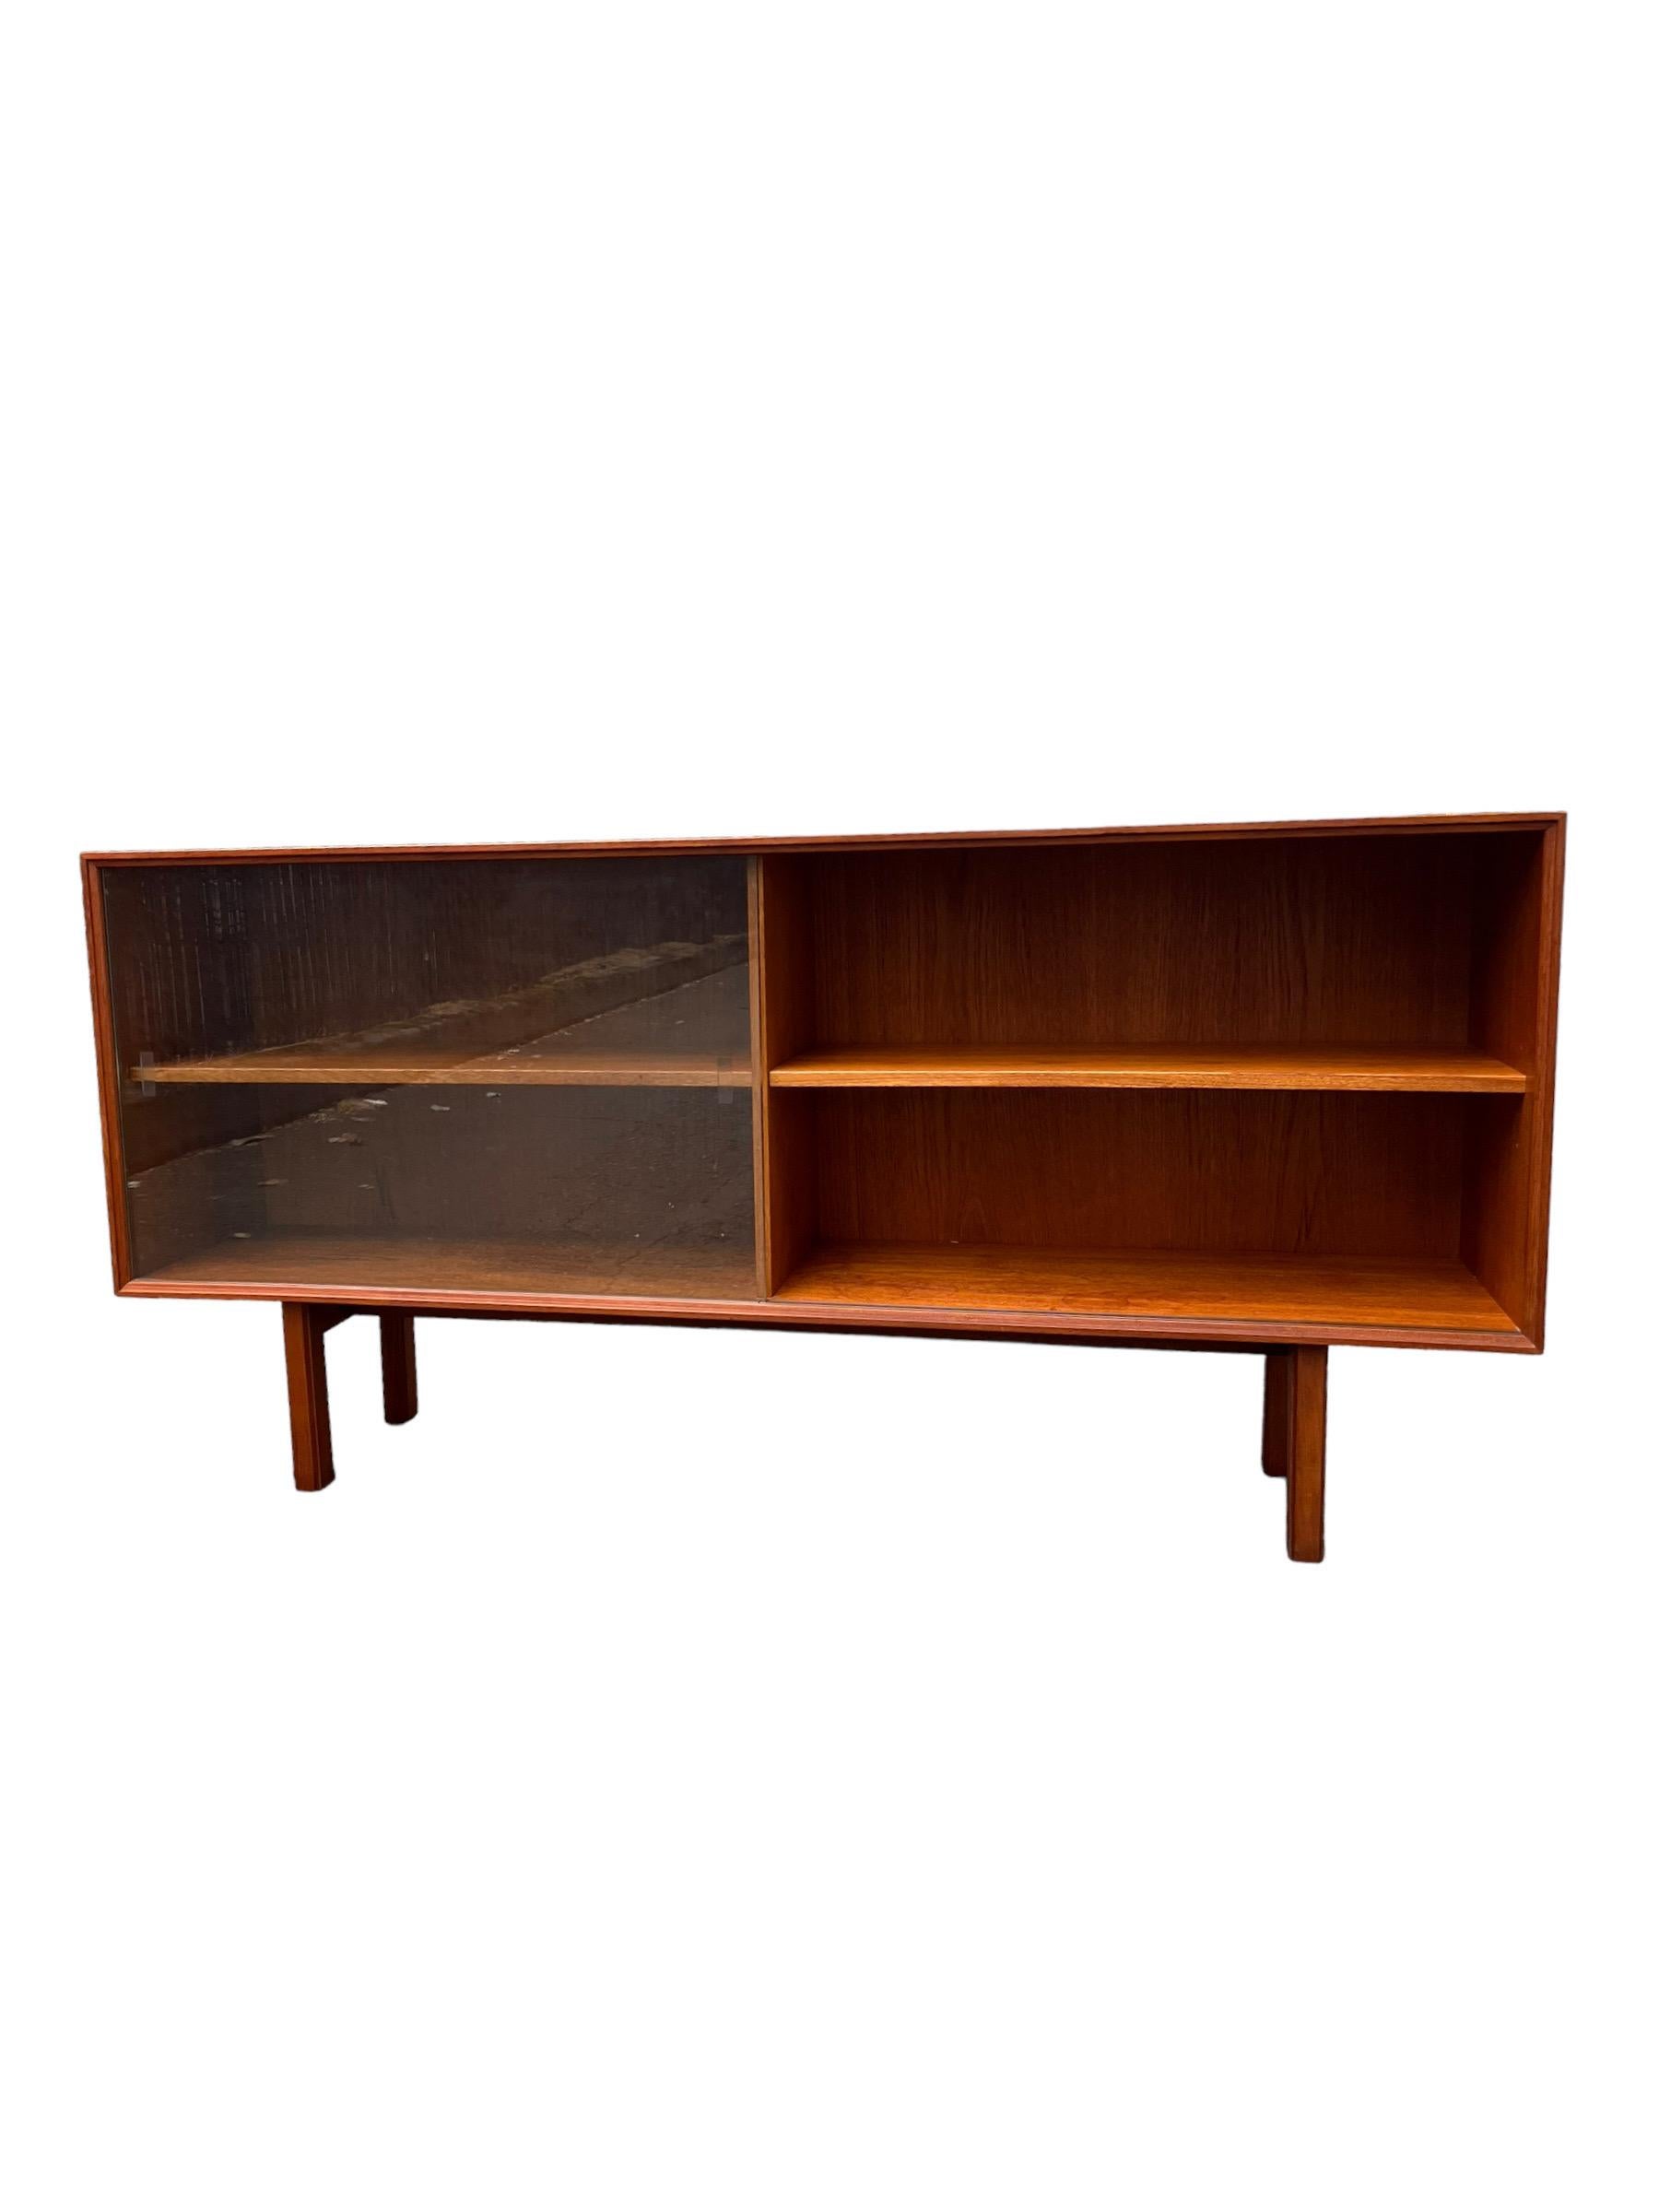 Vintage Danish Mid Century Modern Teak Wood Book Shelf Display Cabinet In Good Condition For Sale In Seattle, WA